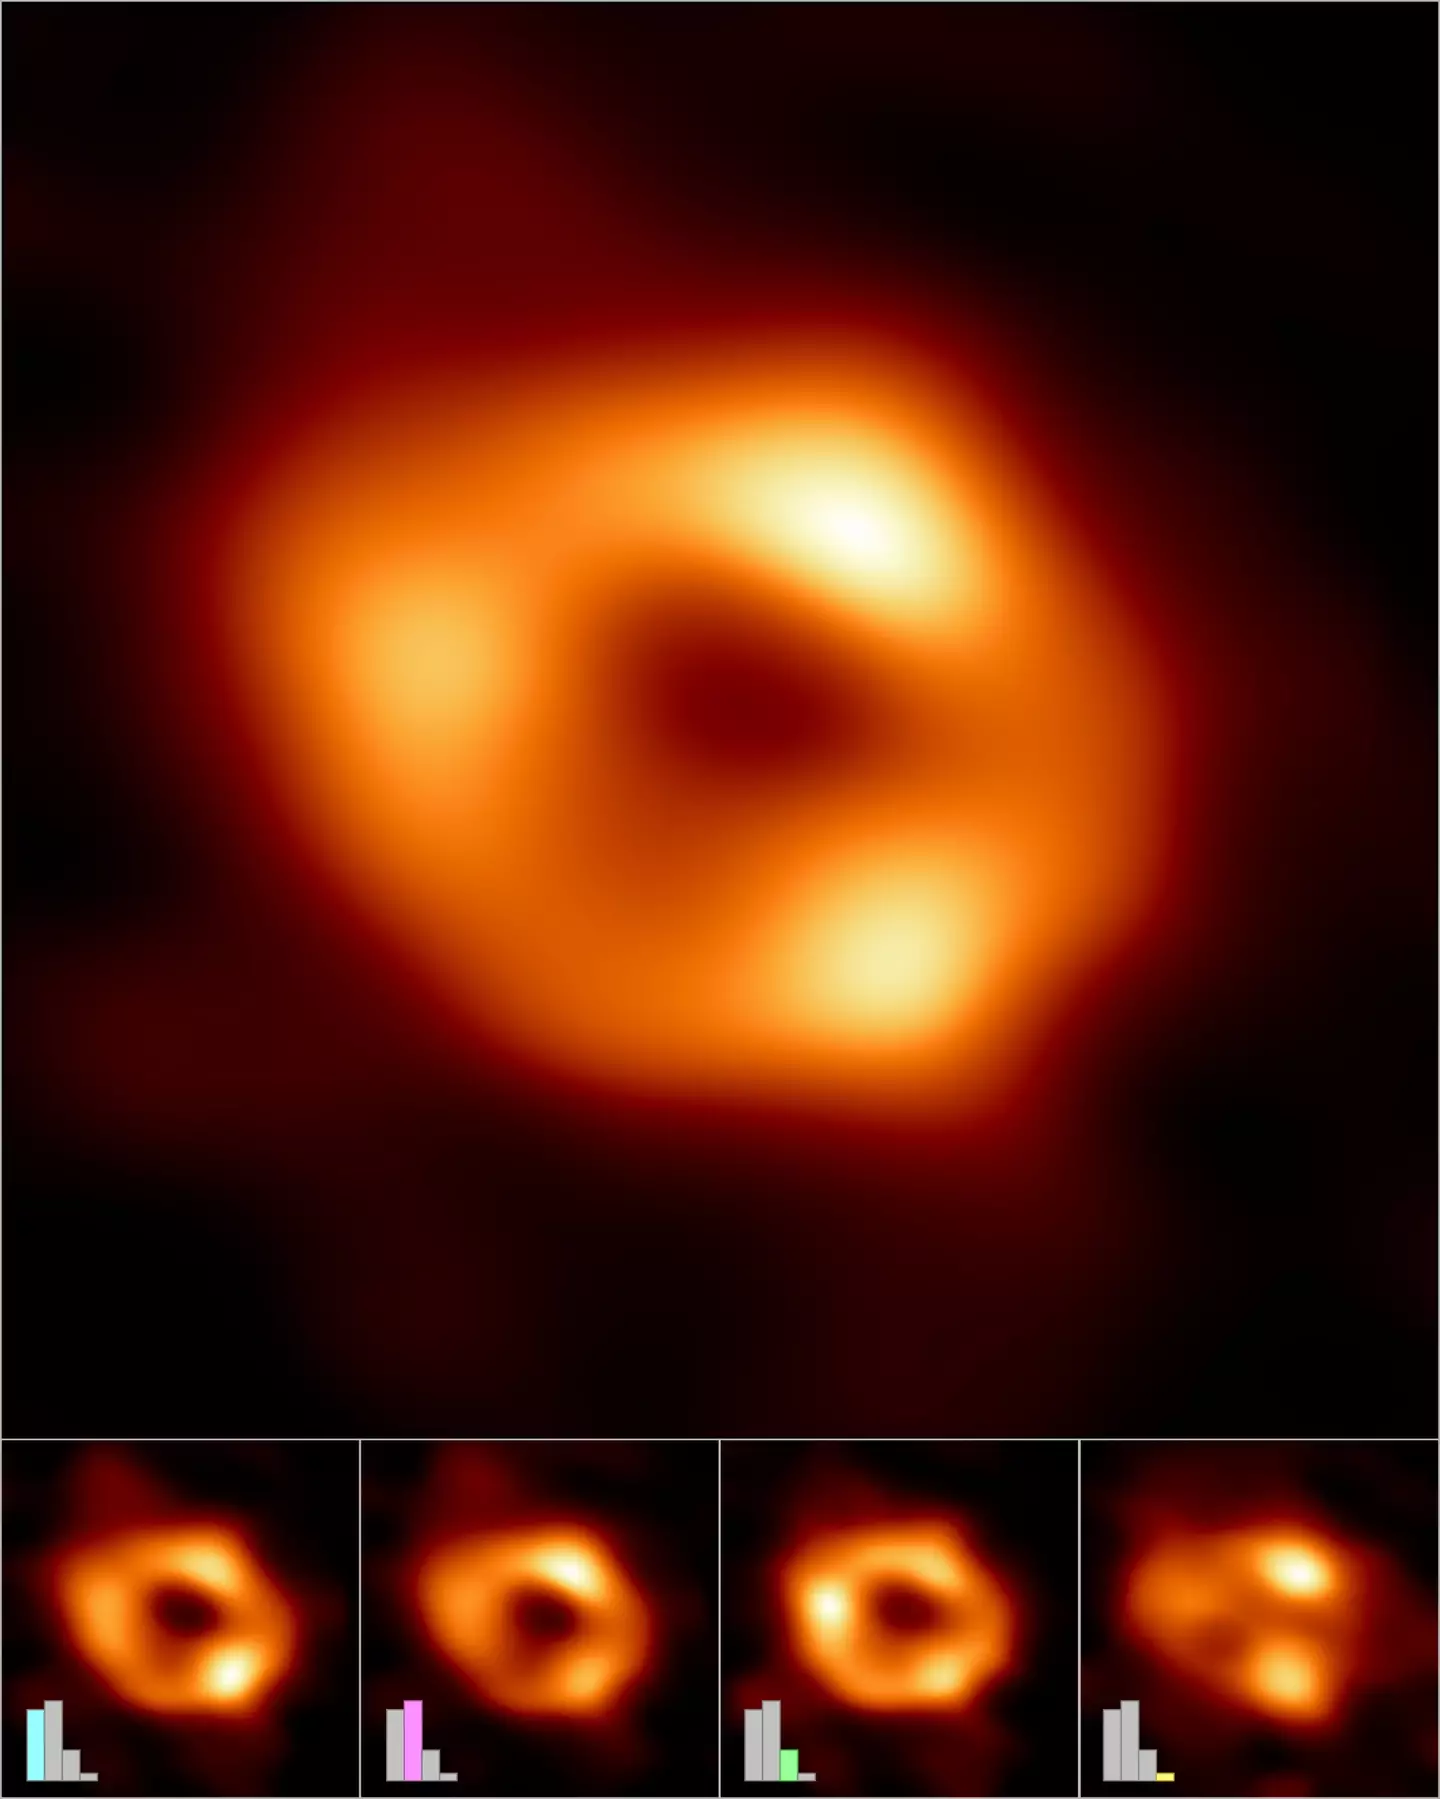 A visualisation of a black hole.